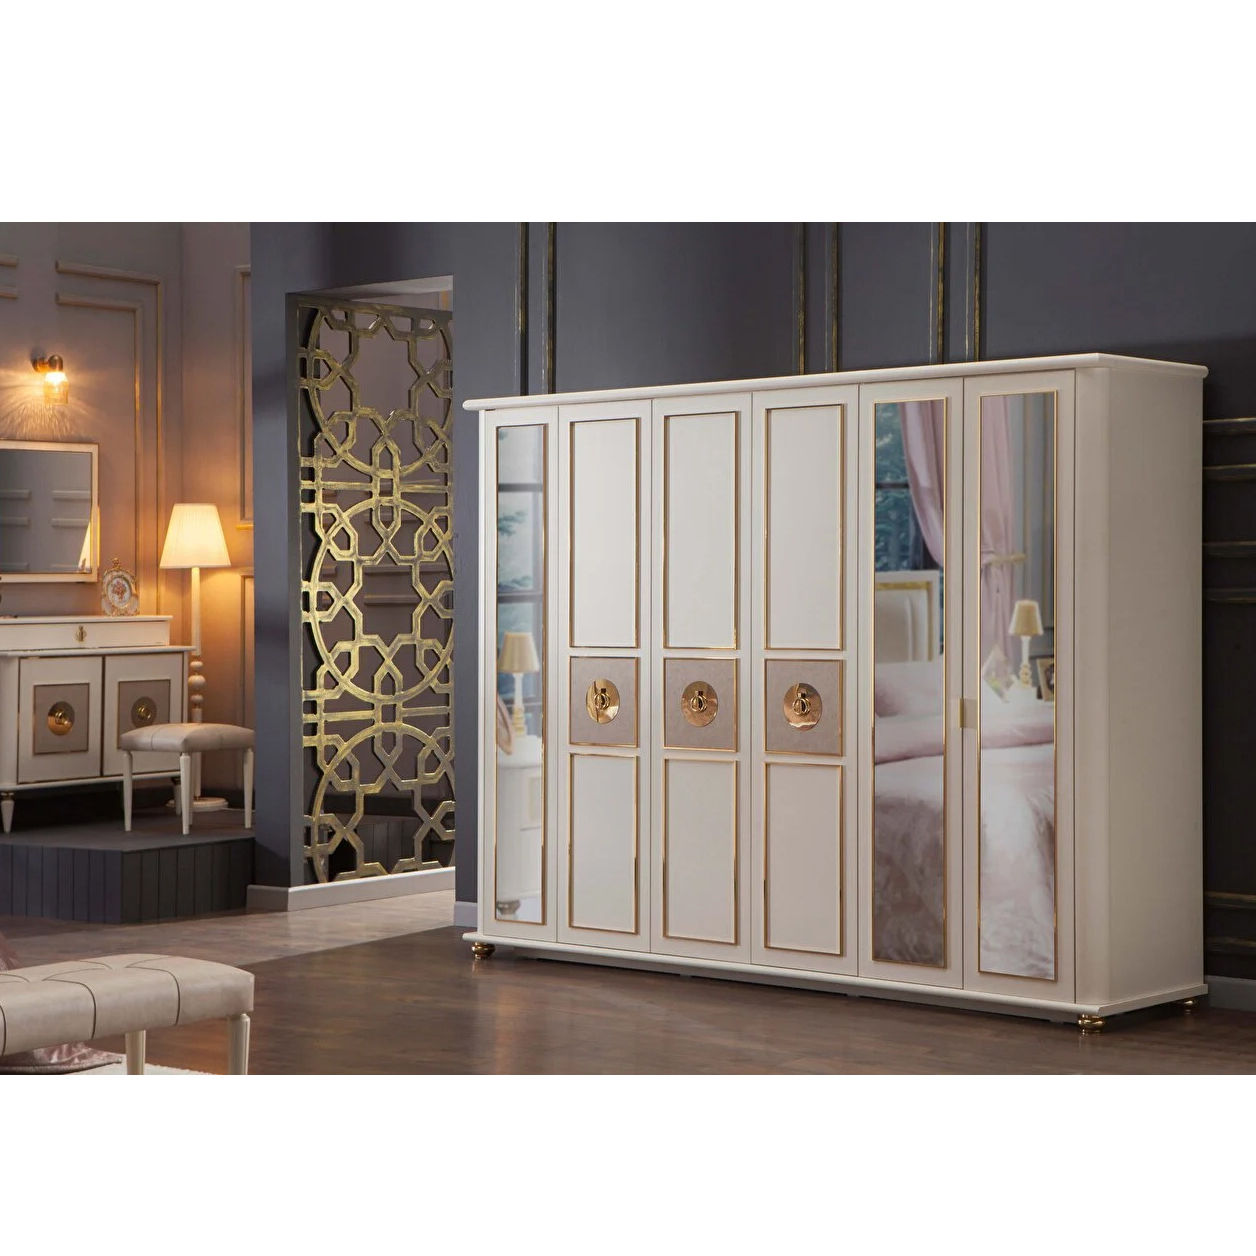 Шкаф платяной Bellona Mistral, 6-ти дверный, размер 274х68х210 см (MIST-34)MIST-34